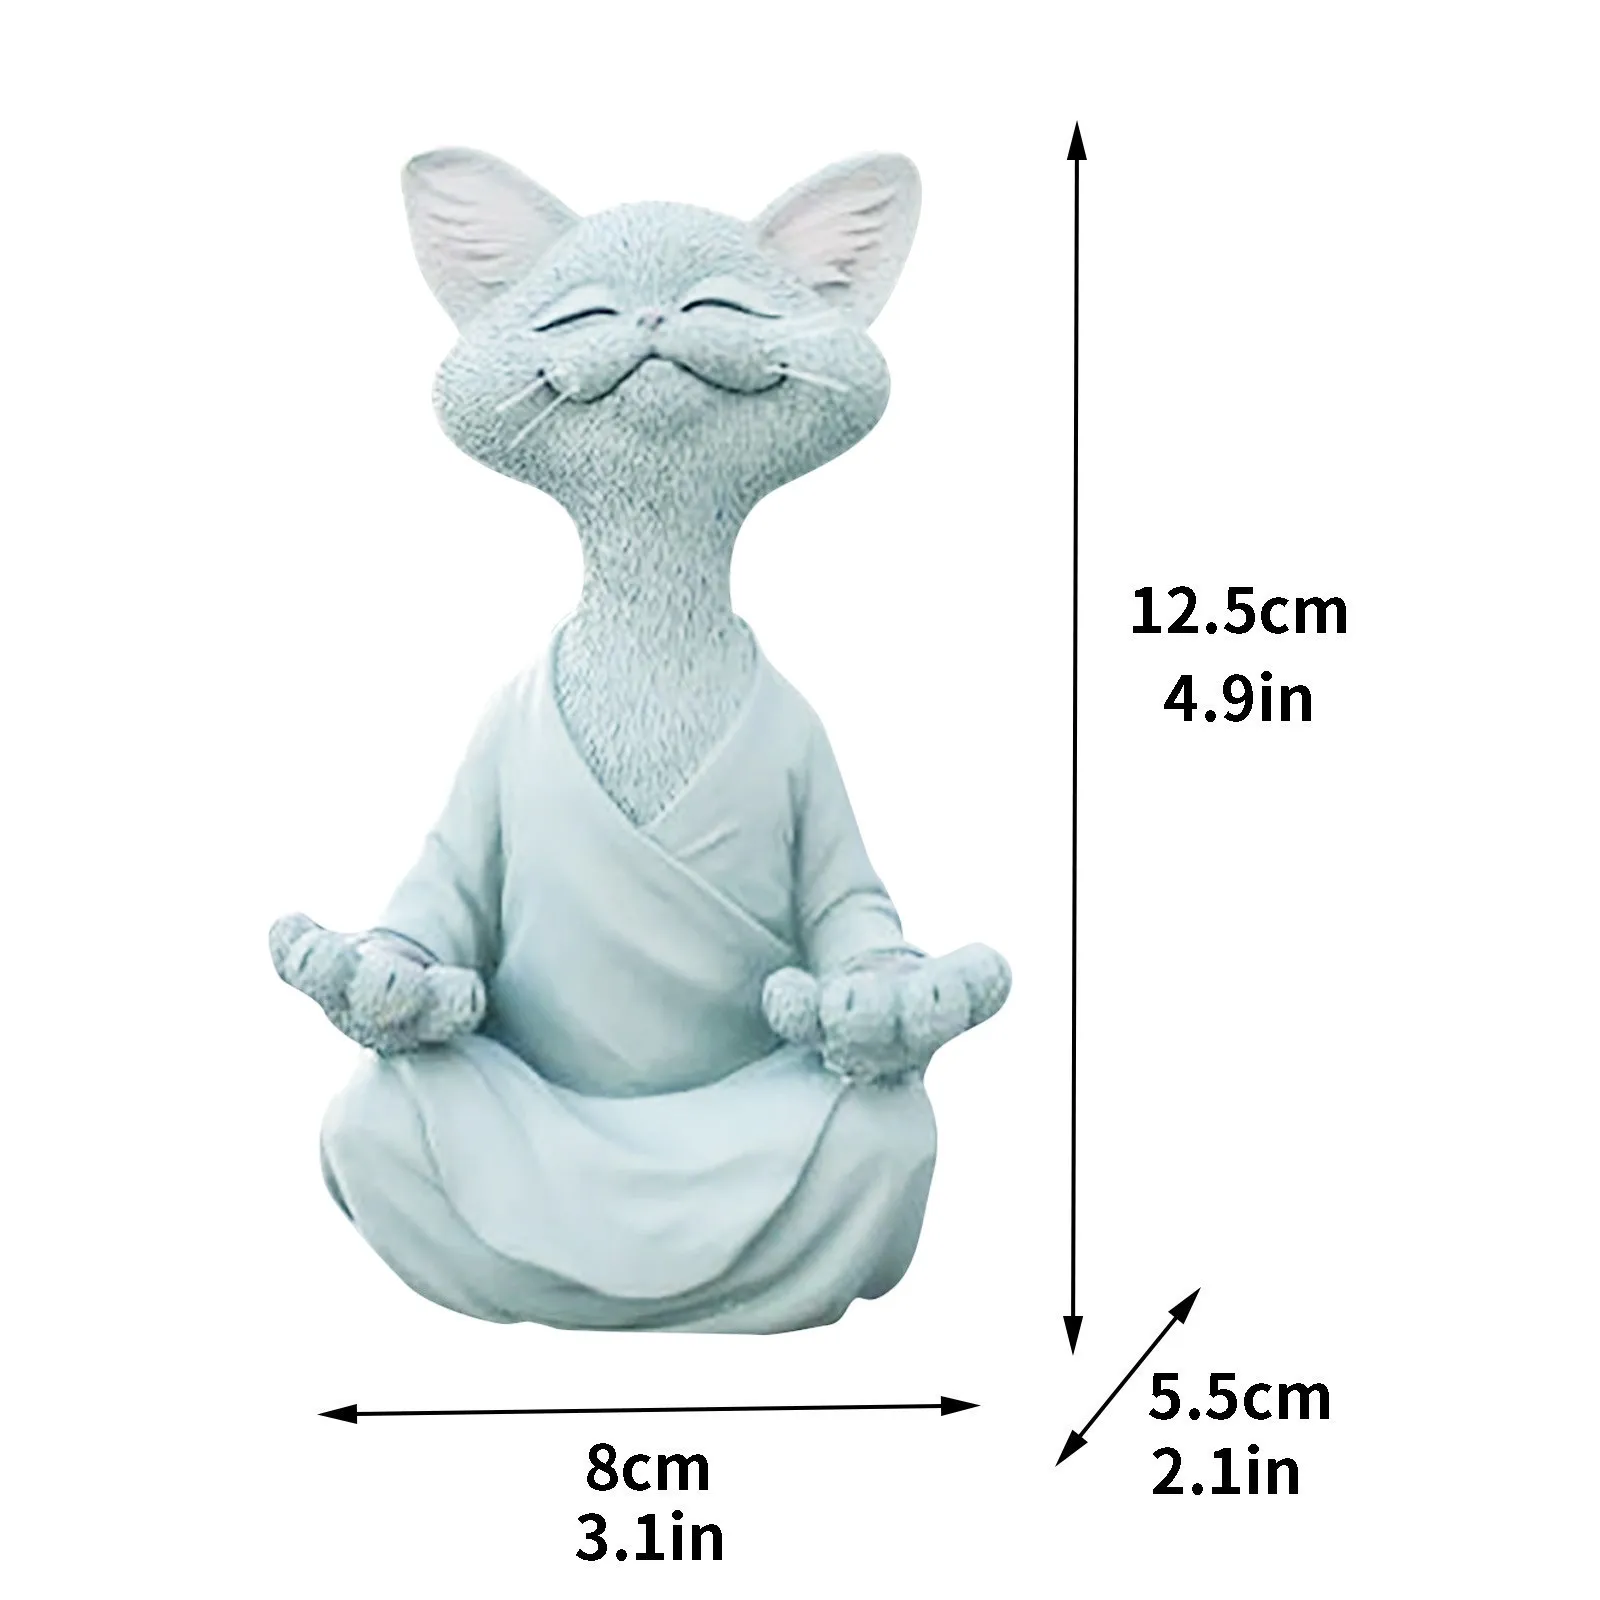 

Meditation Statue - Zen Sculpture Resin Yoga Decor Buddha Cat Statue Garden Statue Ornament Home Decoration Gift